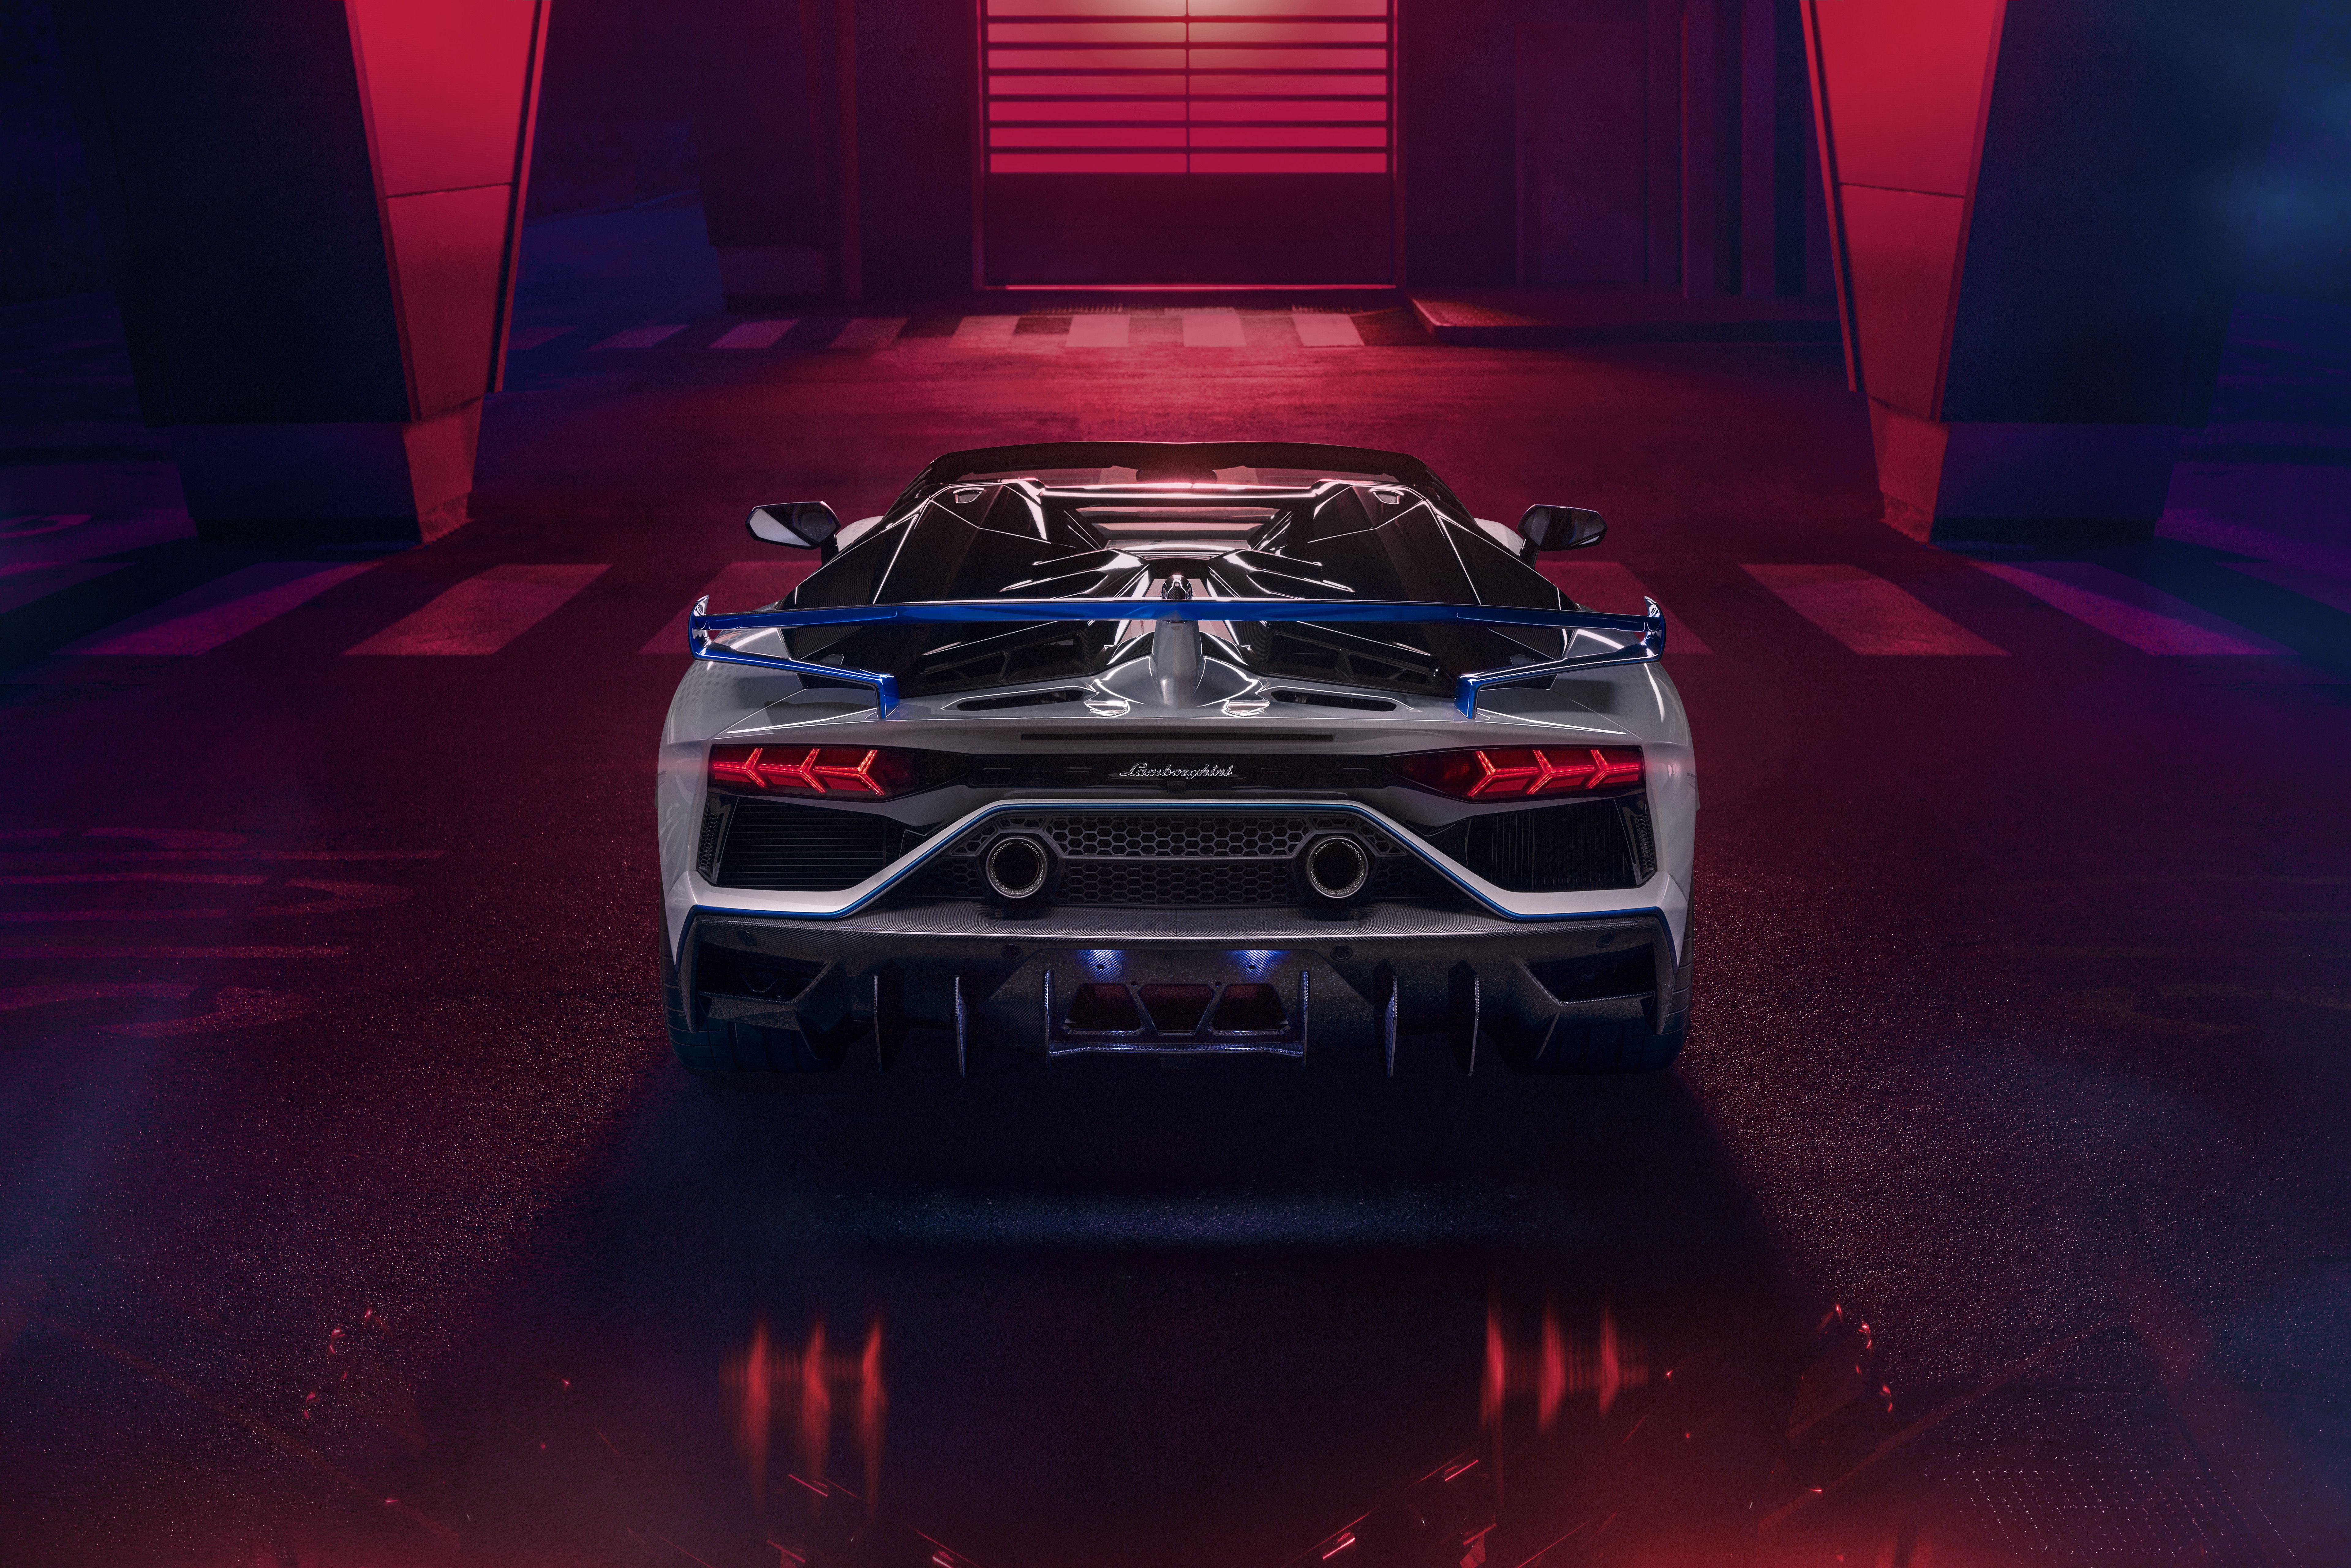 Lamborghini Aventador SVJ Roadster Xago Edition Rear View, HD Cars, 4k Wallpaper, Image, Background, Photo and Picture